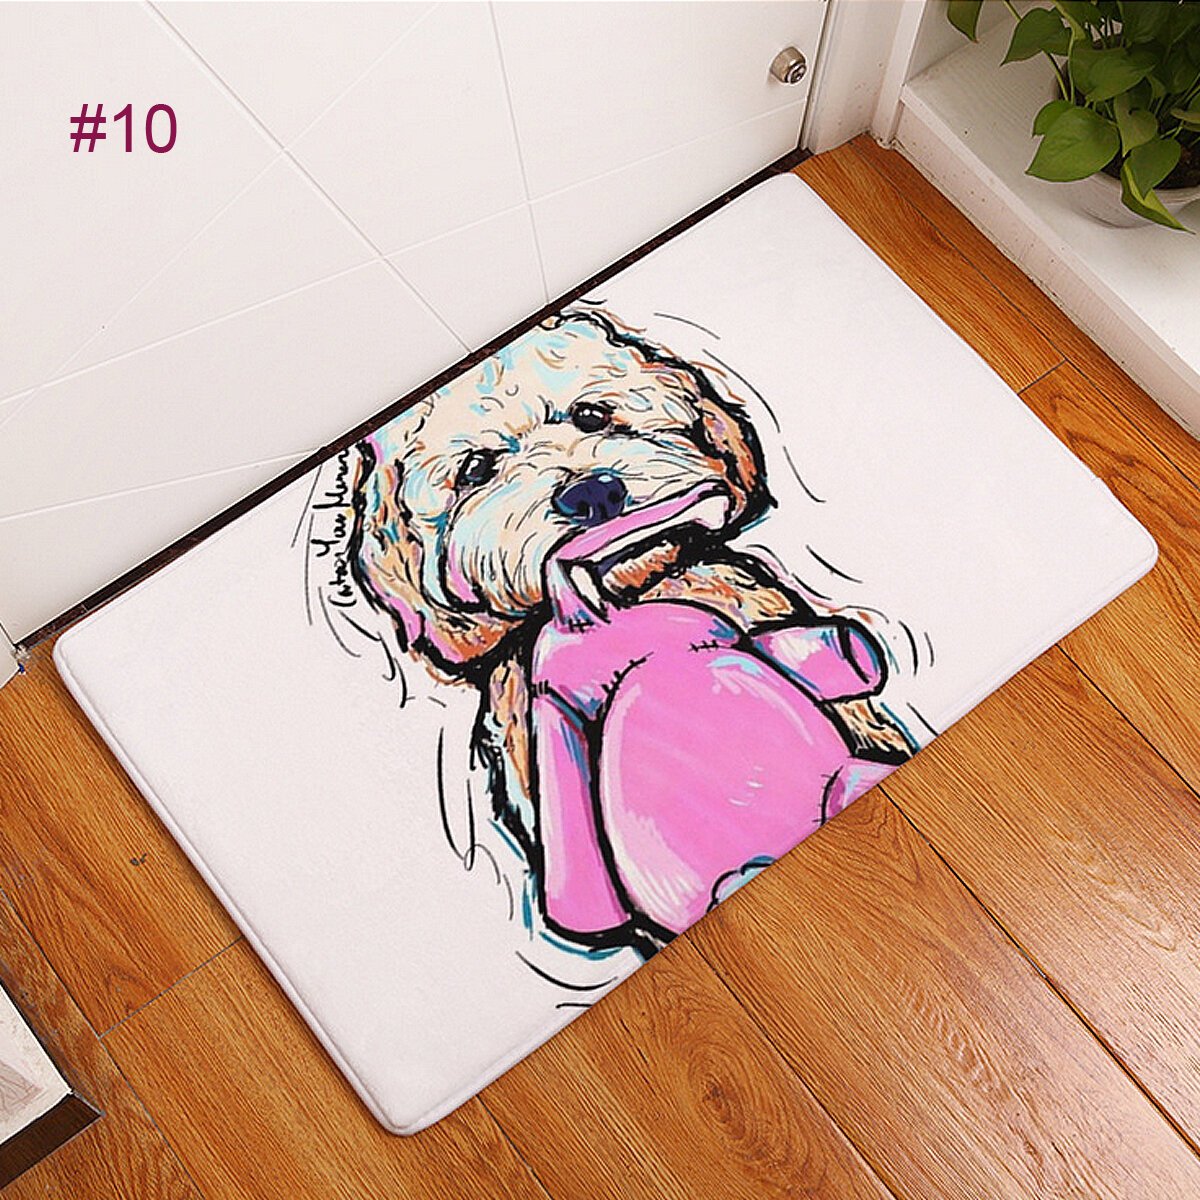 Watercolor Dog Pattern Carpet Mats Non Slip Bath Rugs Animal Door Rectangle Floor Mats 40*60cm